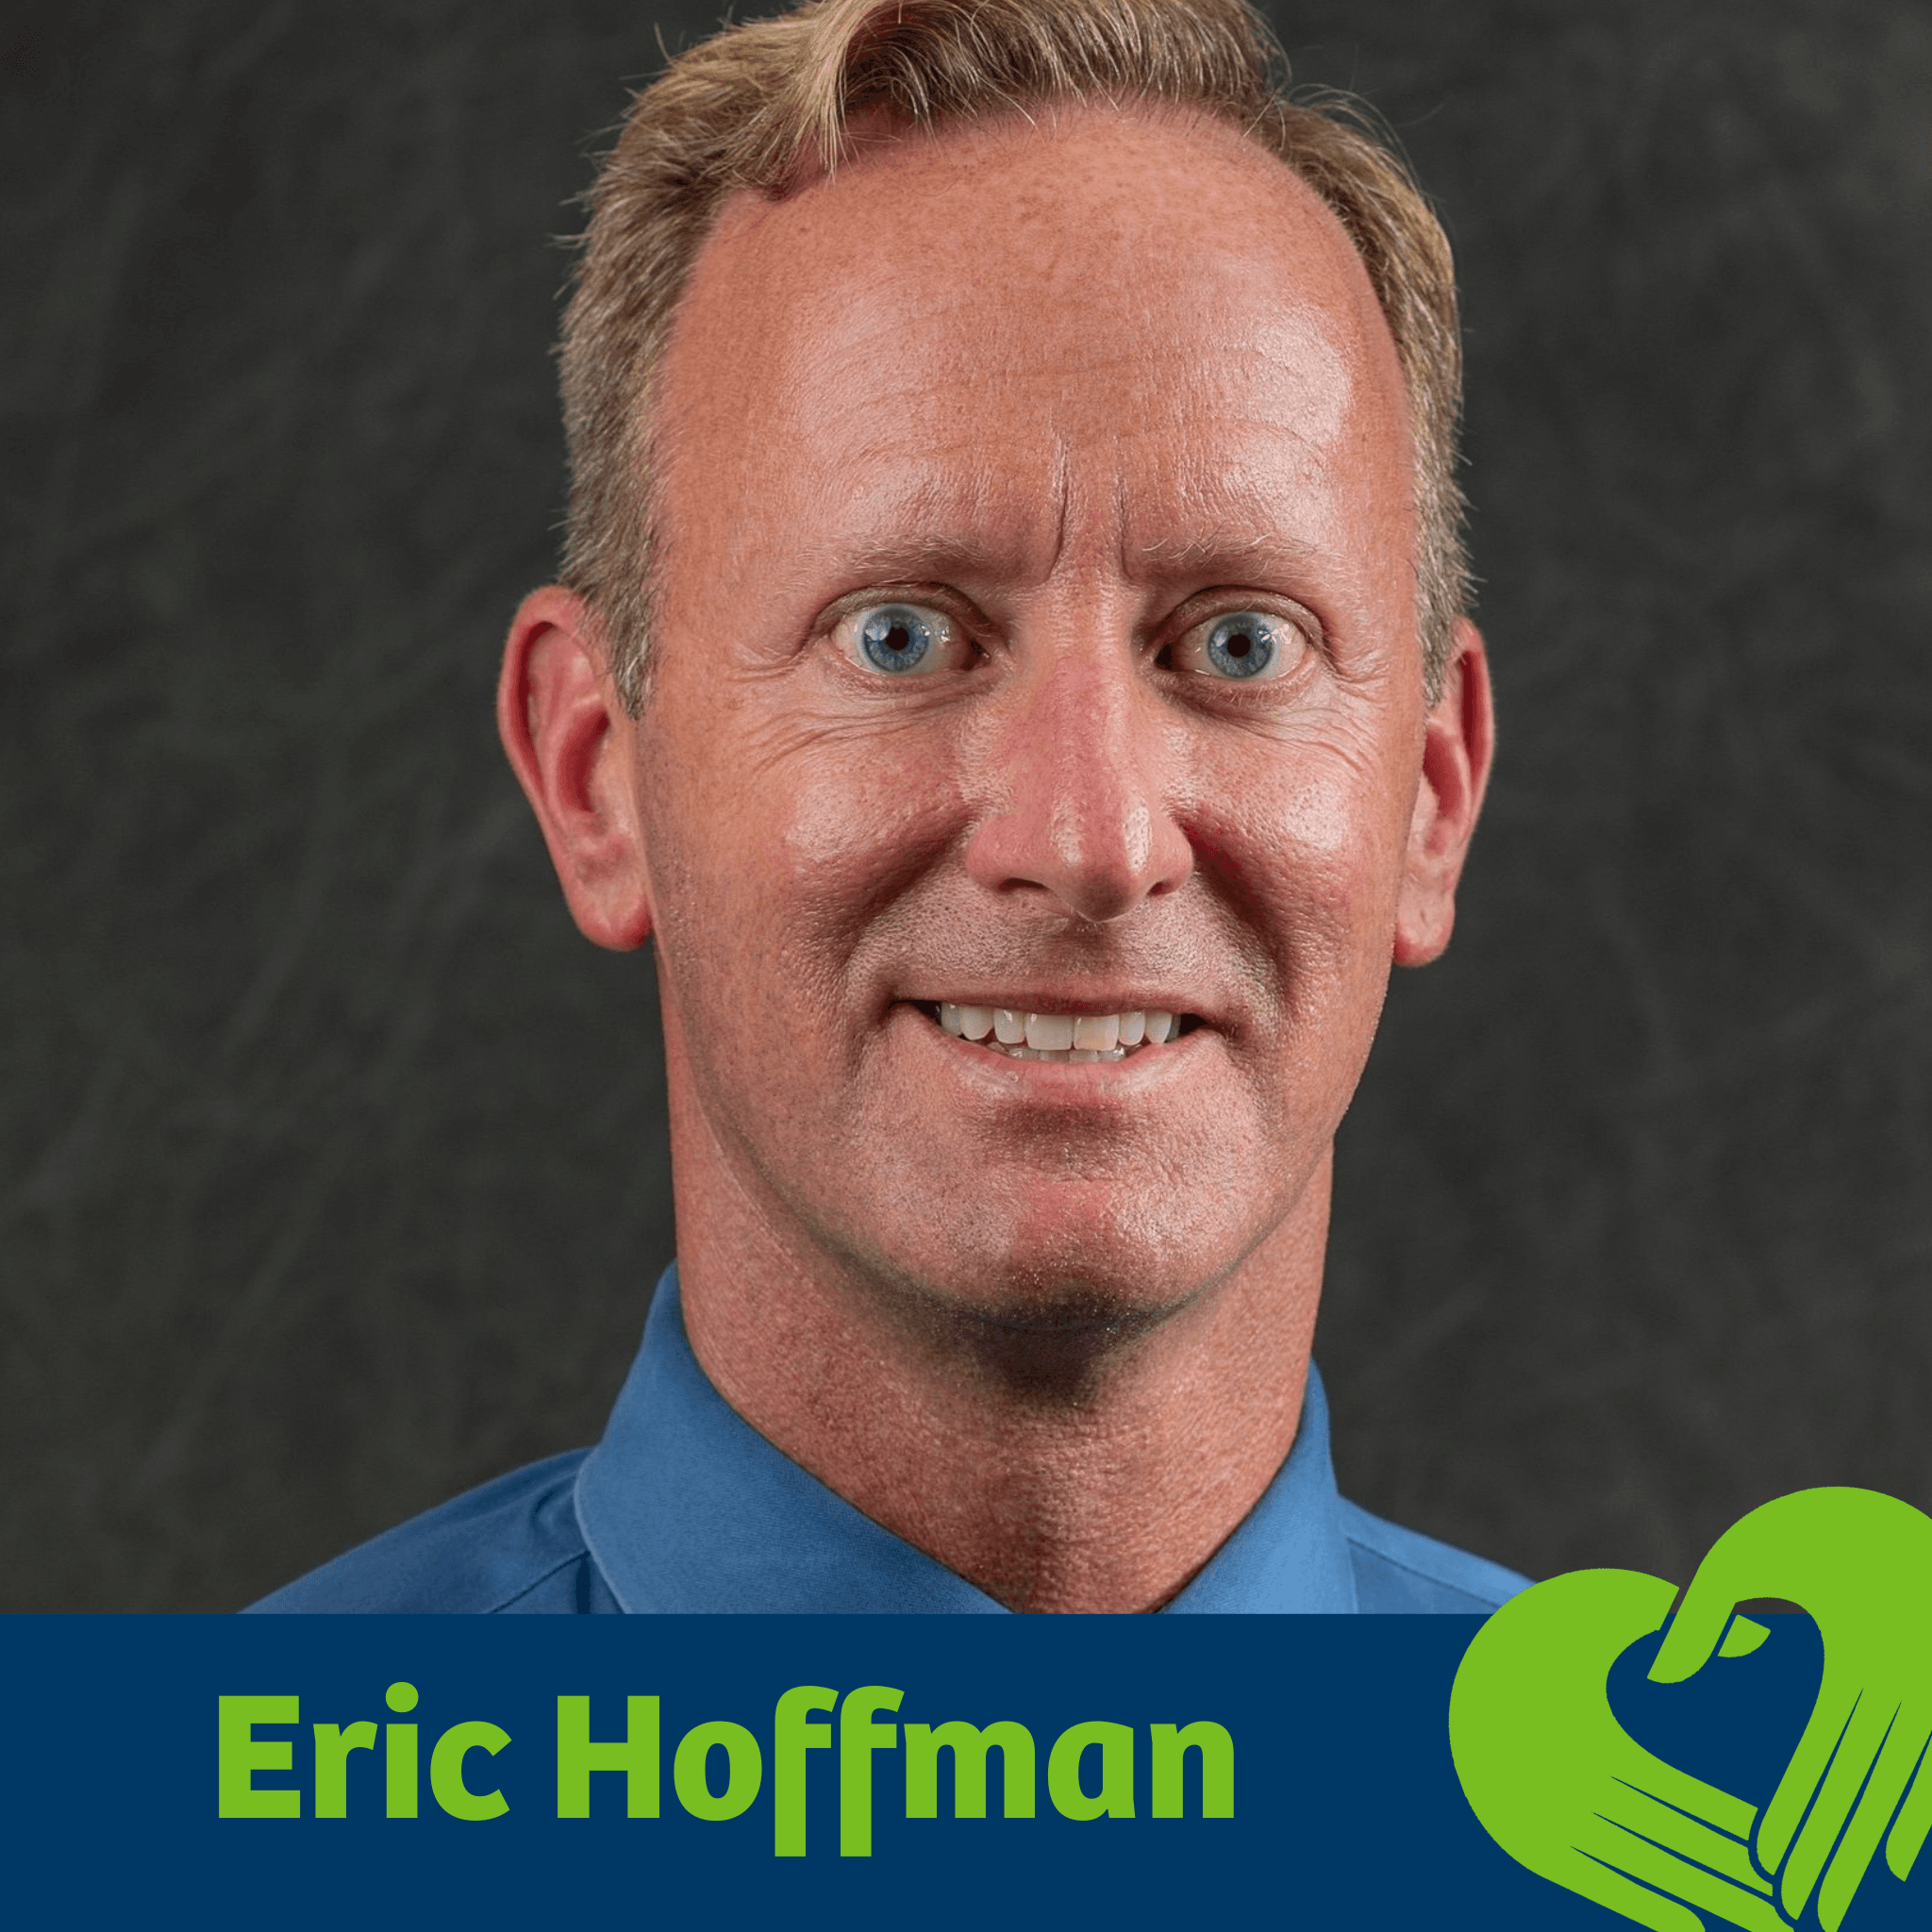 Eric Hoffman